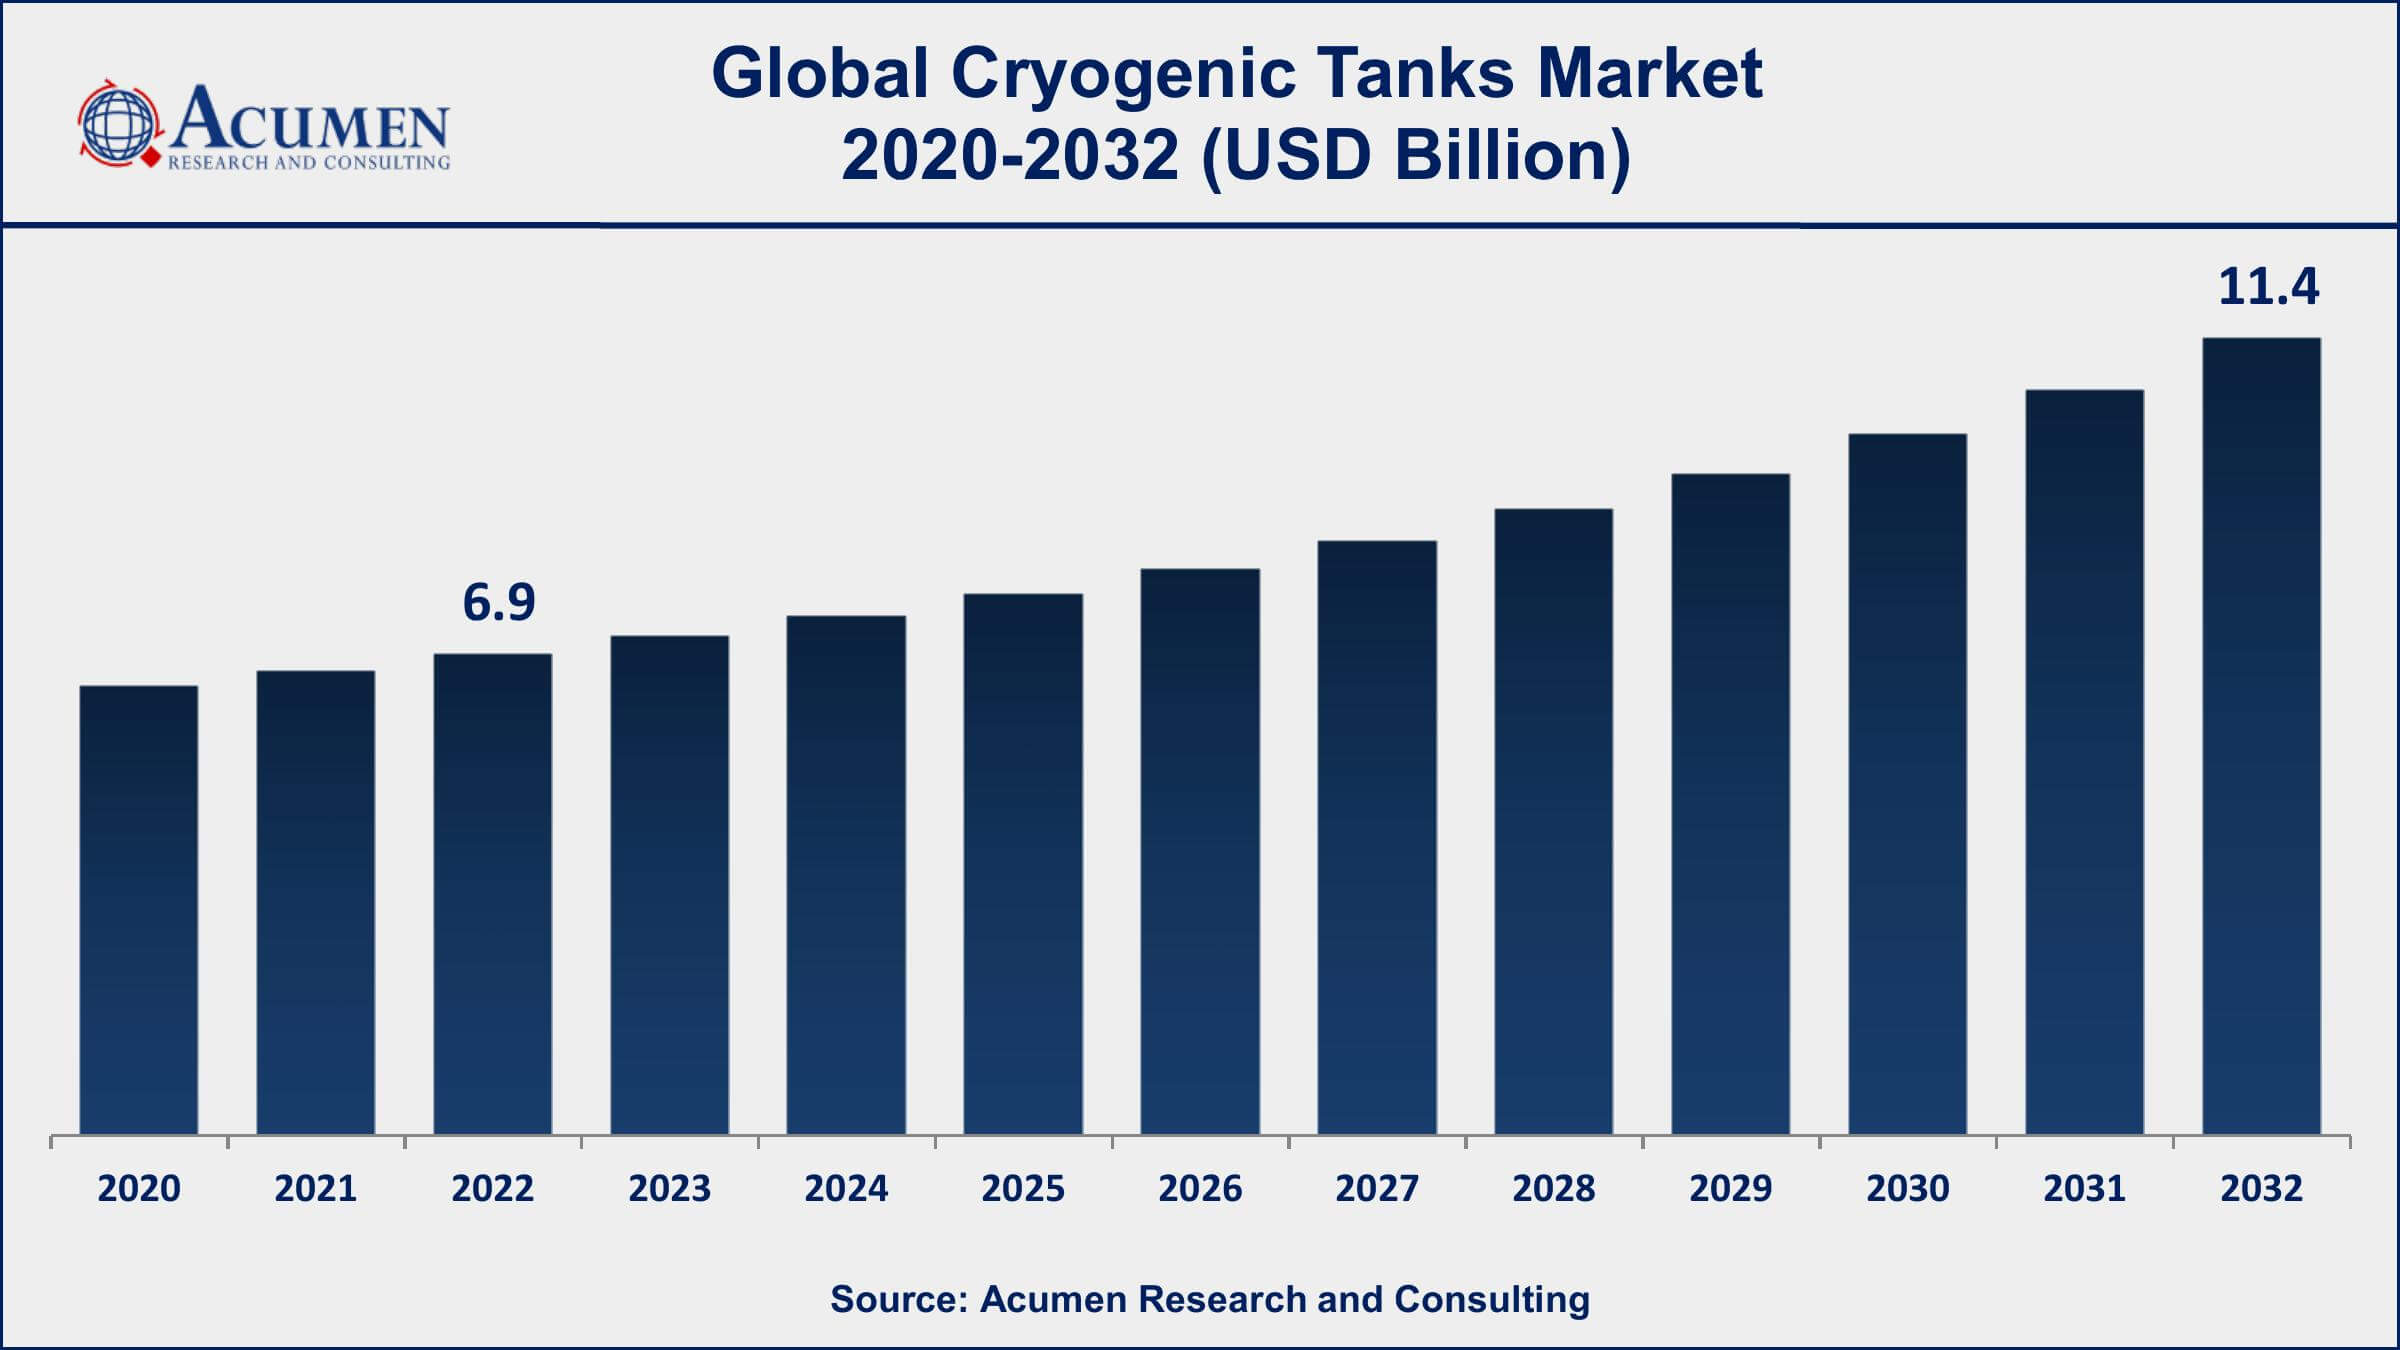 Cryogenic Tanks Market Drivers